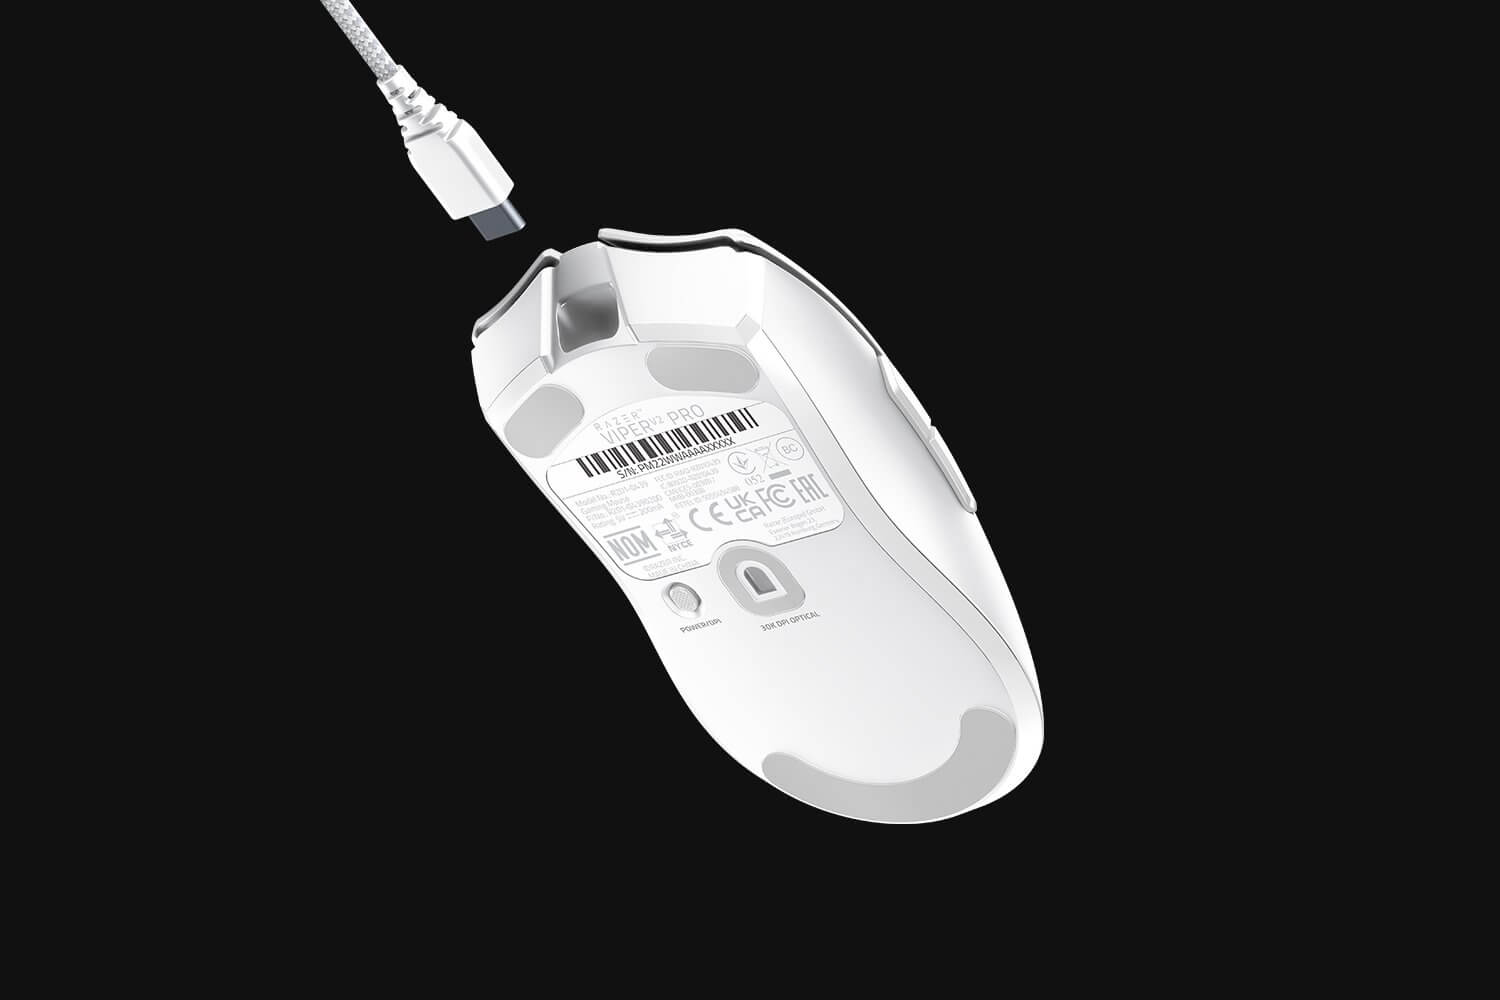 mouse-razer-viper-v2-pro-wireless-blanco-rz01-04390200-r3u1-4